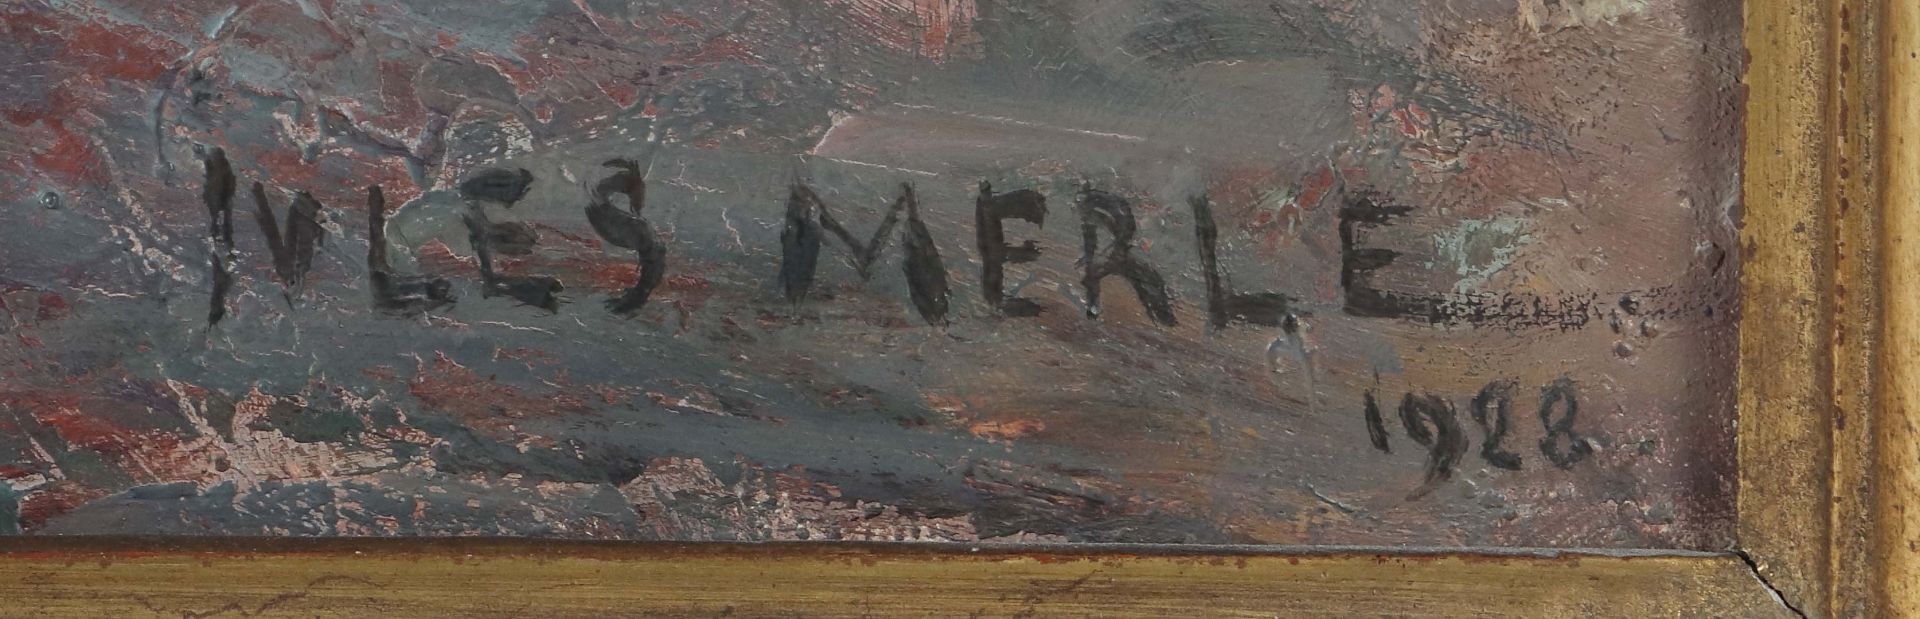 Merle, Jules Laval 1883 - 1978 - Image 3 of 4